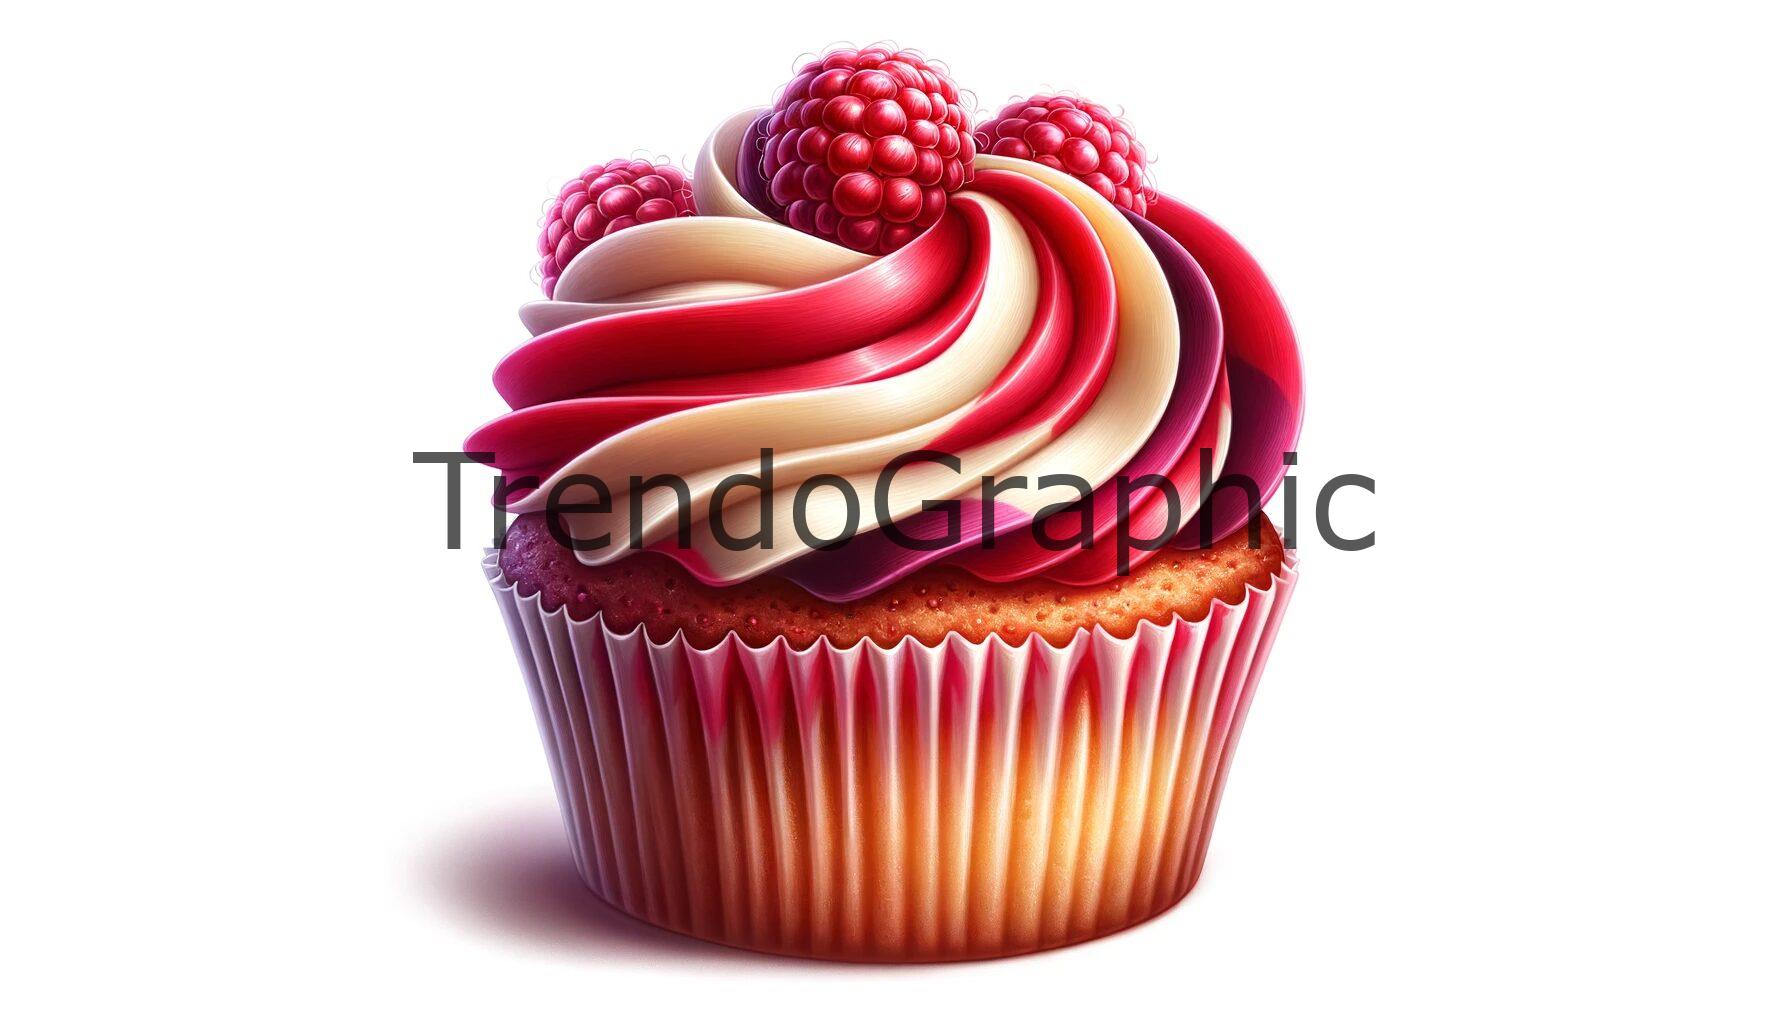 Delightful Raspberry Ripple Cupcake with Swirls of Frosting